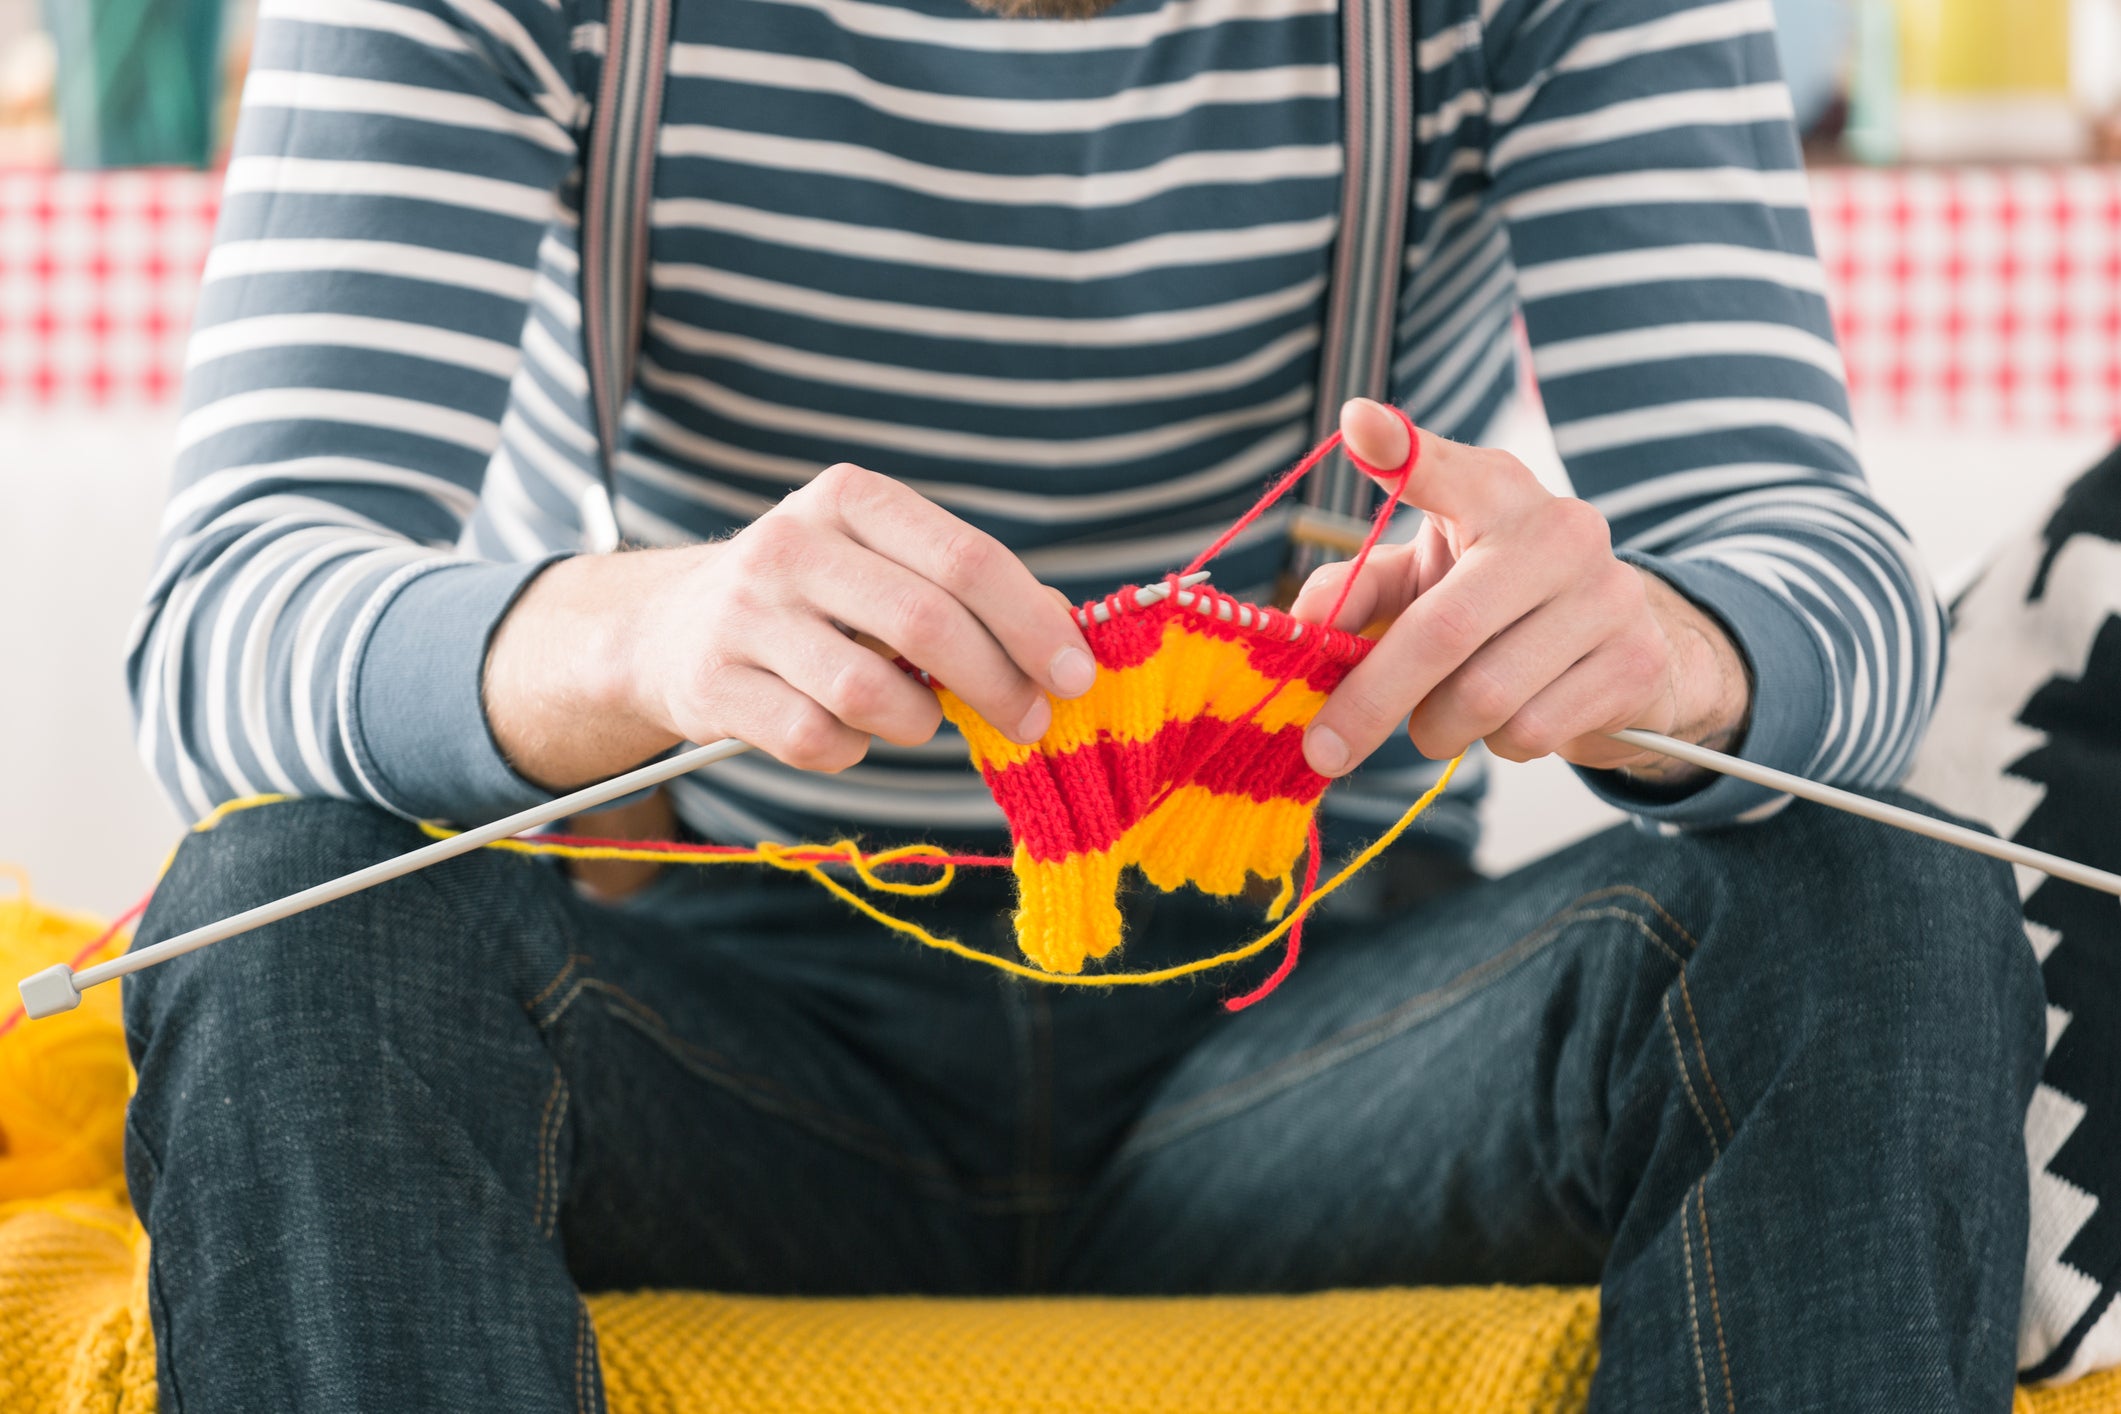 Beginners knitting projects crossword